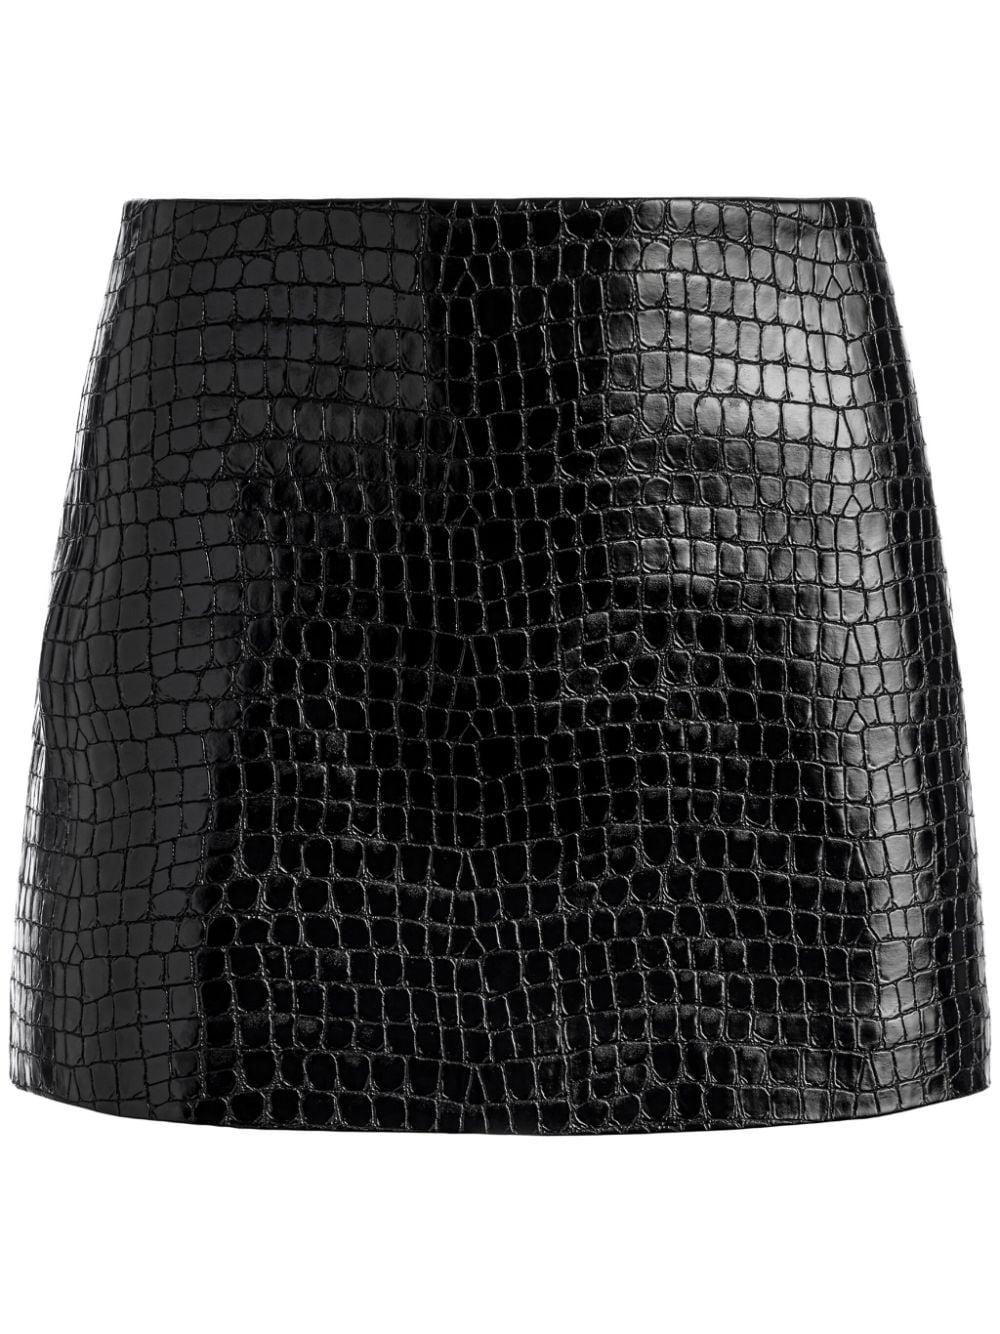 Alice + Olivia Rubi Crocodile-effect Miniskirt in Black | Lyst